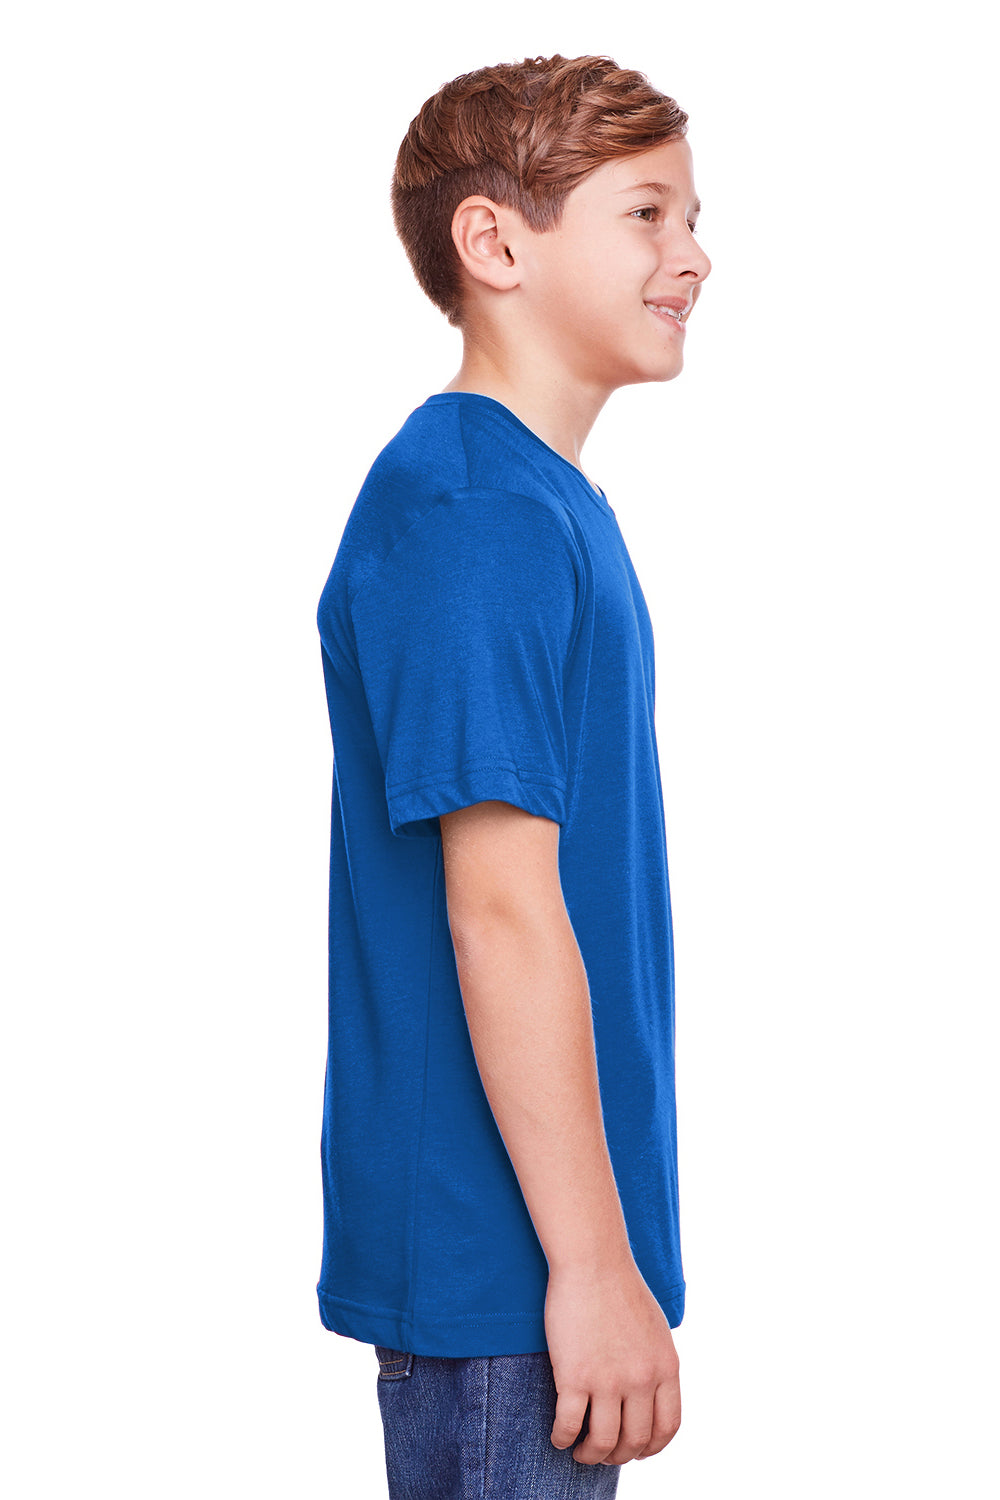 Core 365 CE111Y Youth Fusion ChromaSoft Performance Moisture Wicking Short Sleeve Crewneck T-Shirt Royal Blue Side